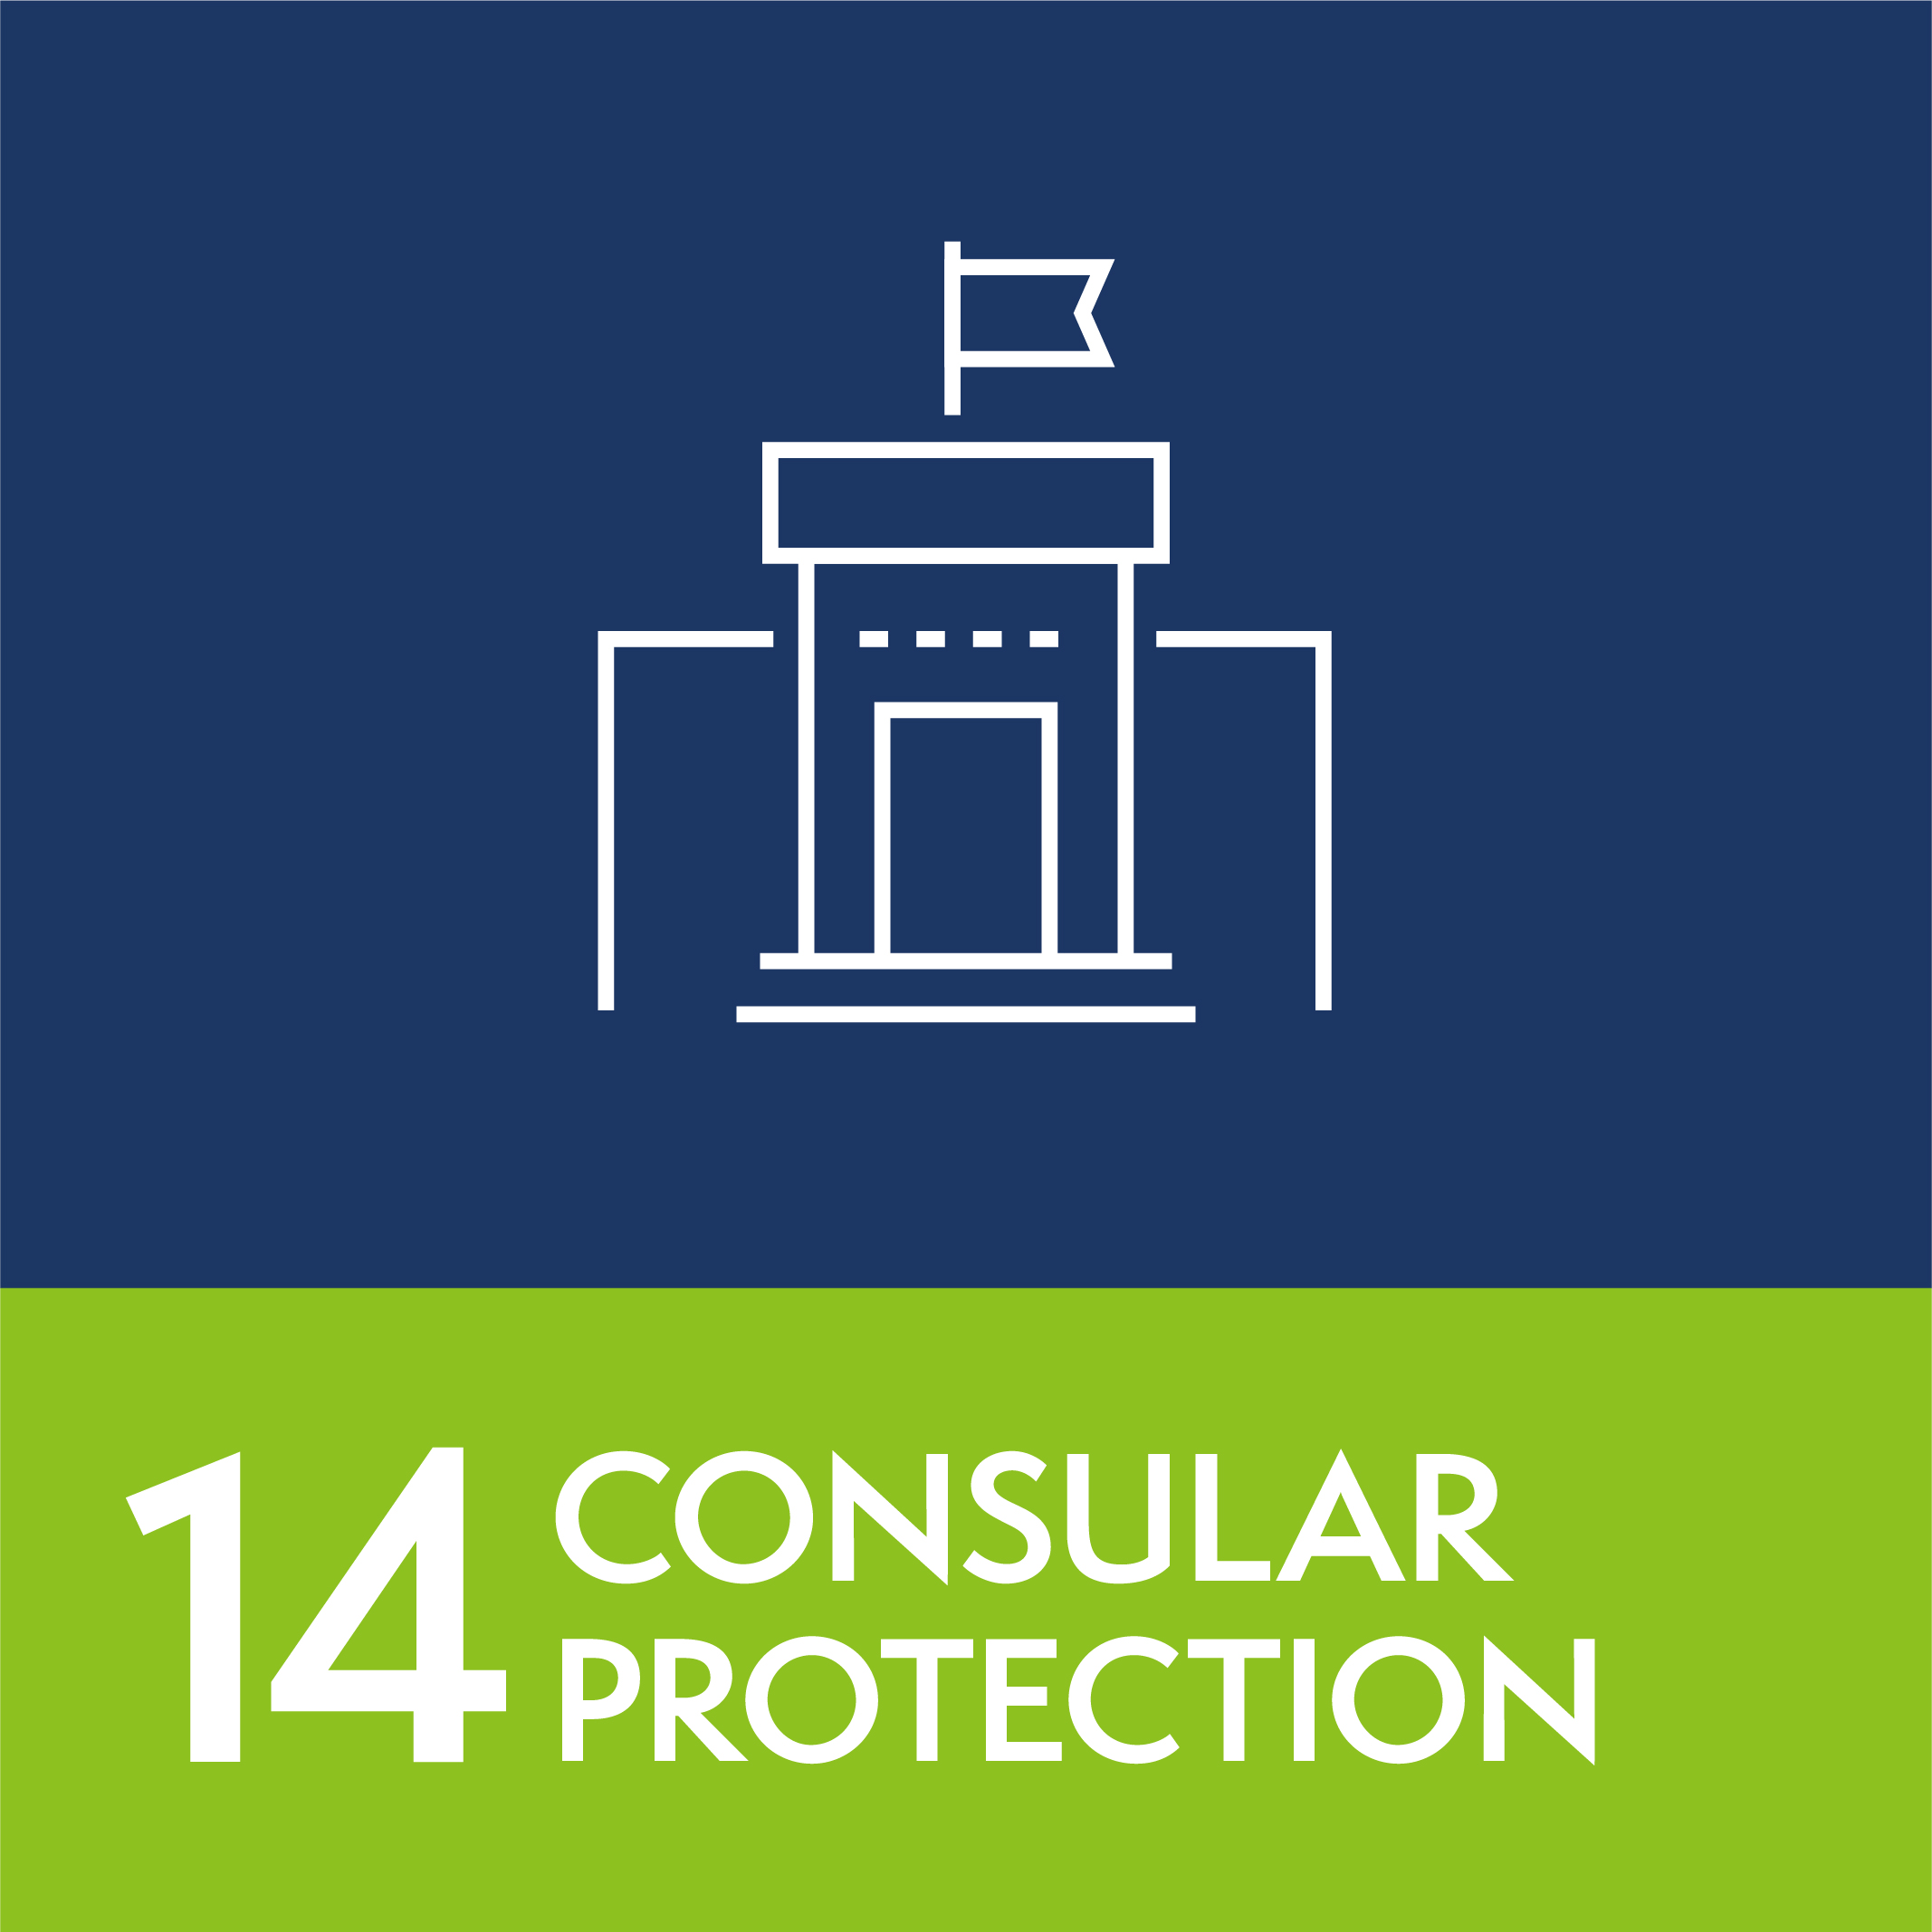 14 - Consular protection